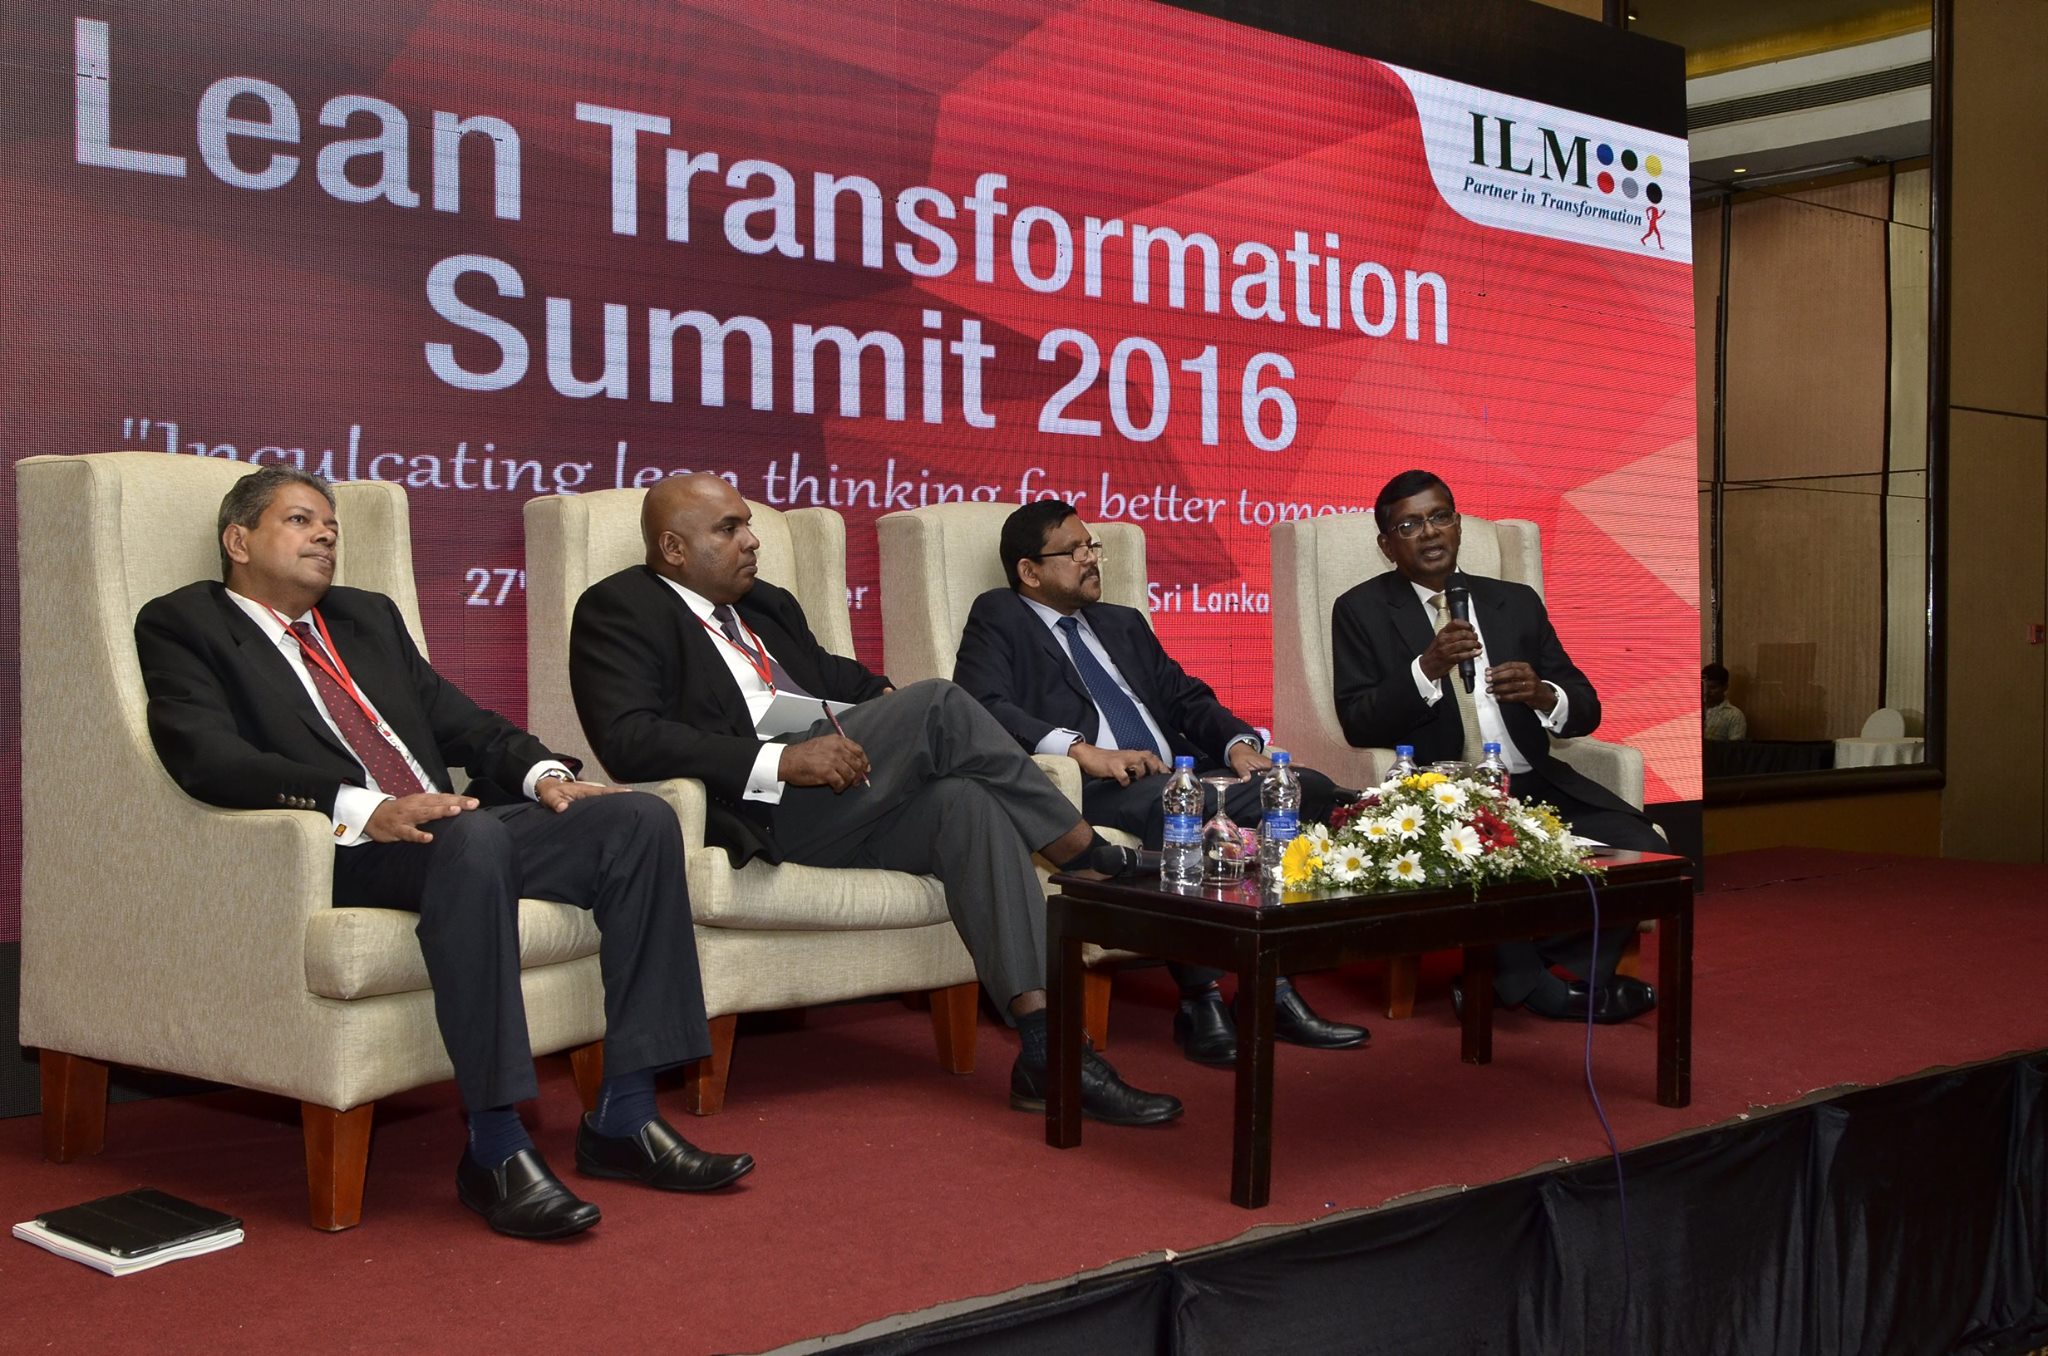 Lean Transformation Summit 2016 